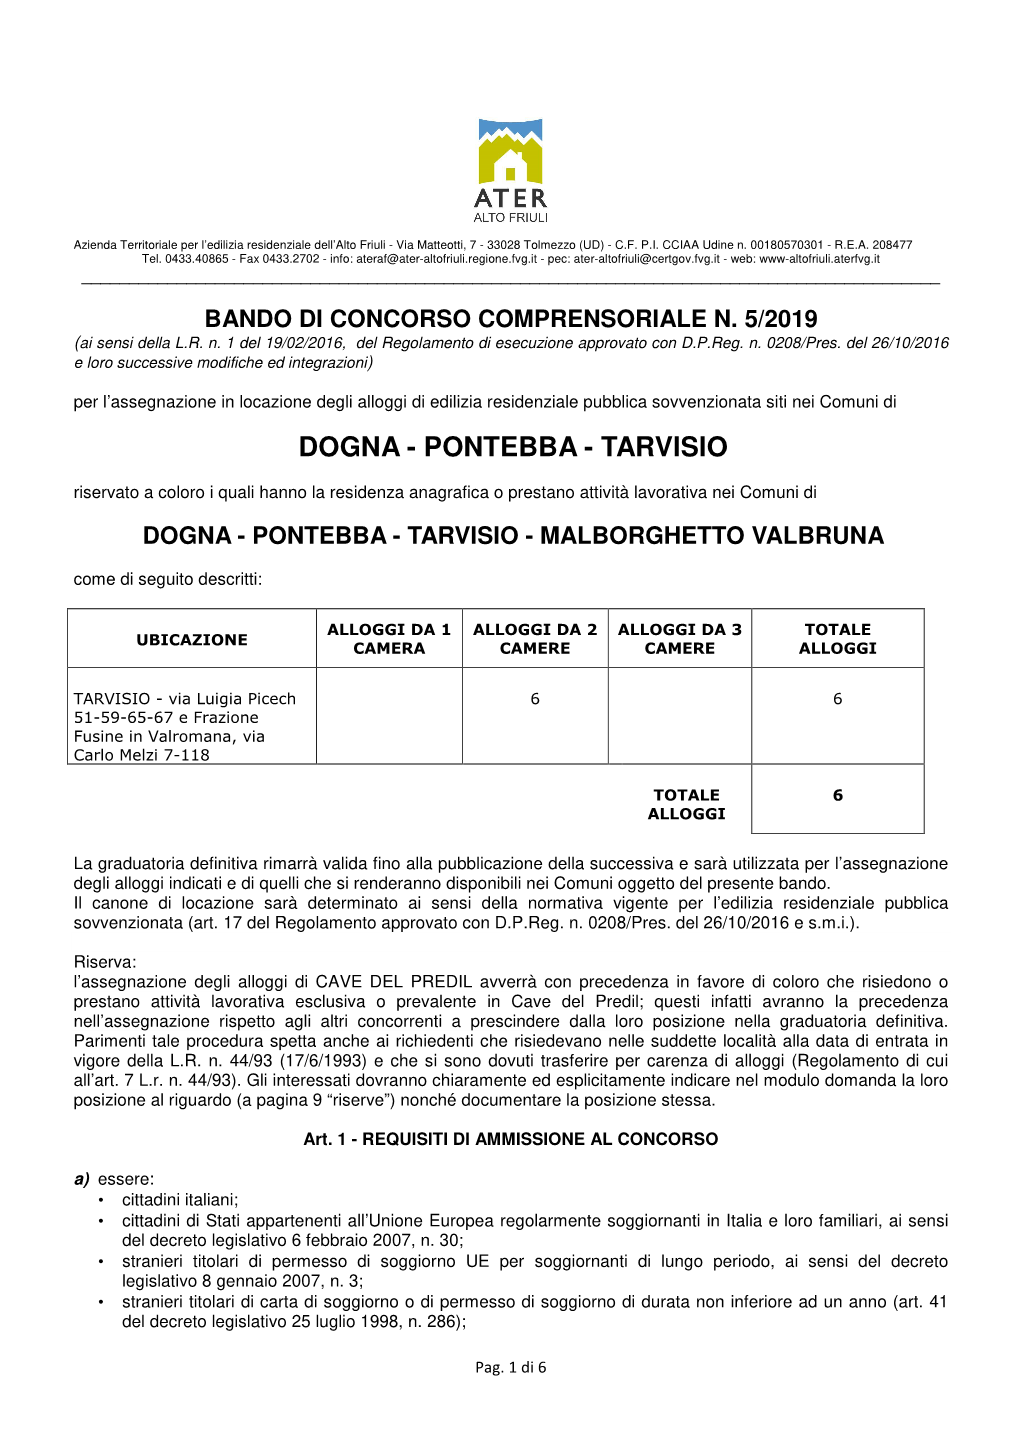 BC 5-2019 Dogna-Pontebba-Tarvisio